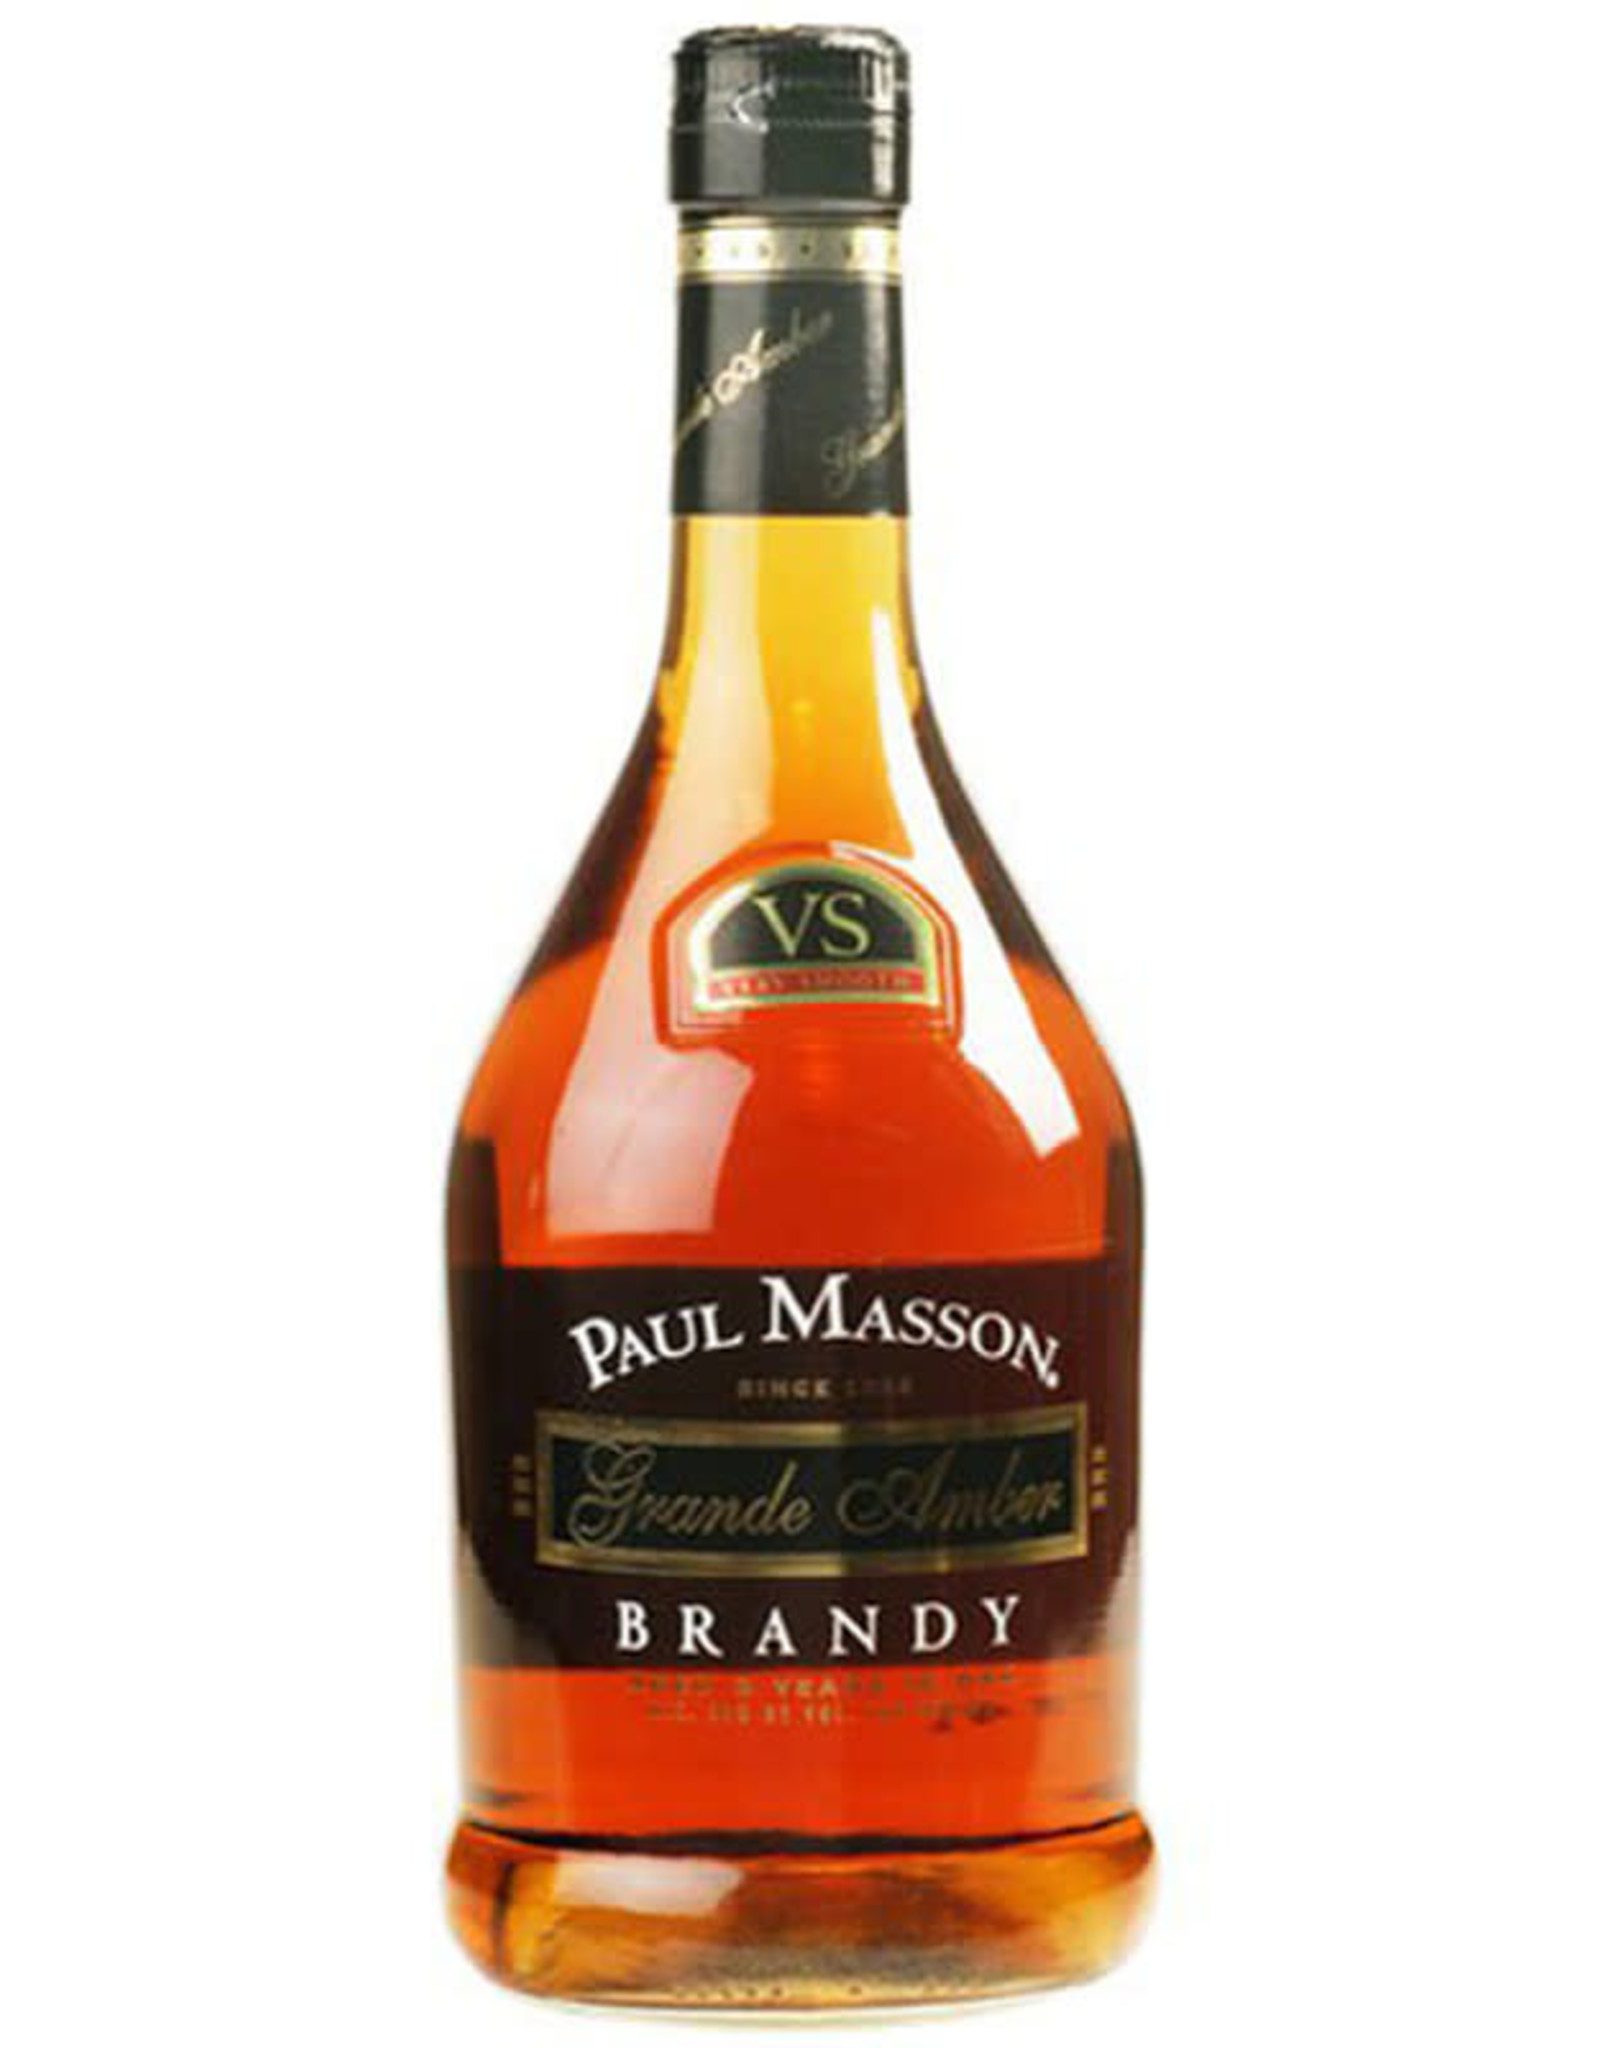 Paul Masson Paul Masson Brandy VS